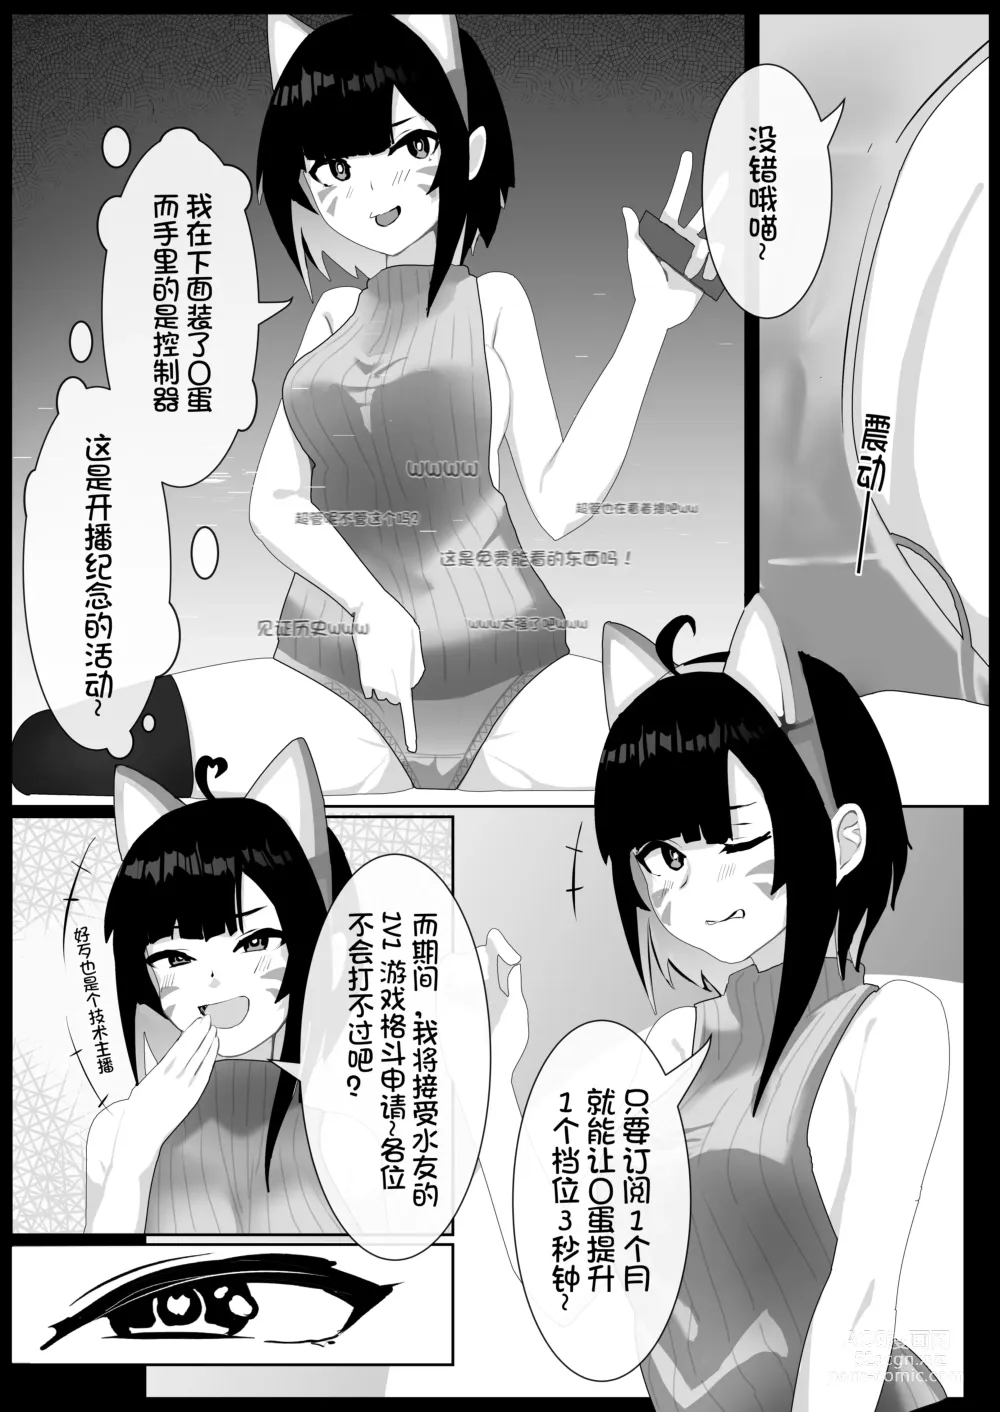 Page 6 of manga 皮物問題學生 #1 渡邊佳奈、2